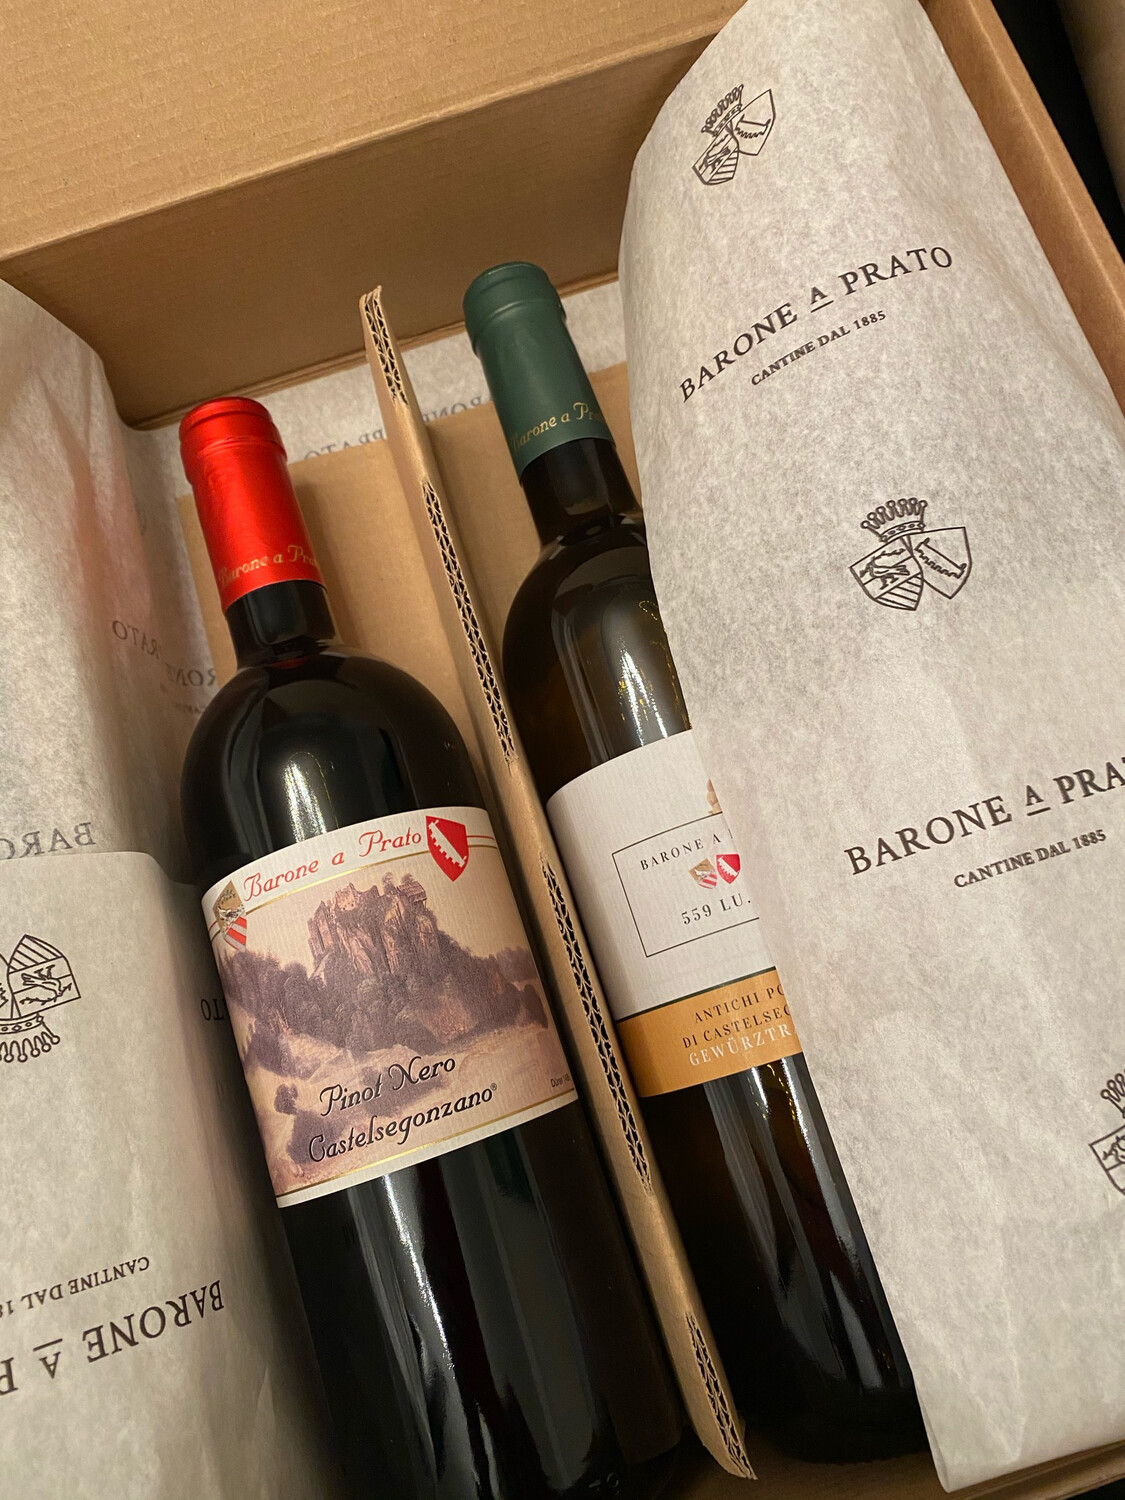 Pinot Nero Castelsegonzano  o Gewürztraminer  559 Lu Lu #REGALOVINO + 3 bottiglie assortite 🍷🥂 #vinobio #sostenibile #regalo artigianale